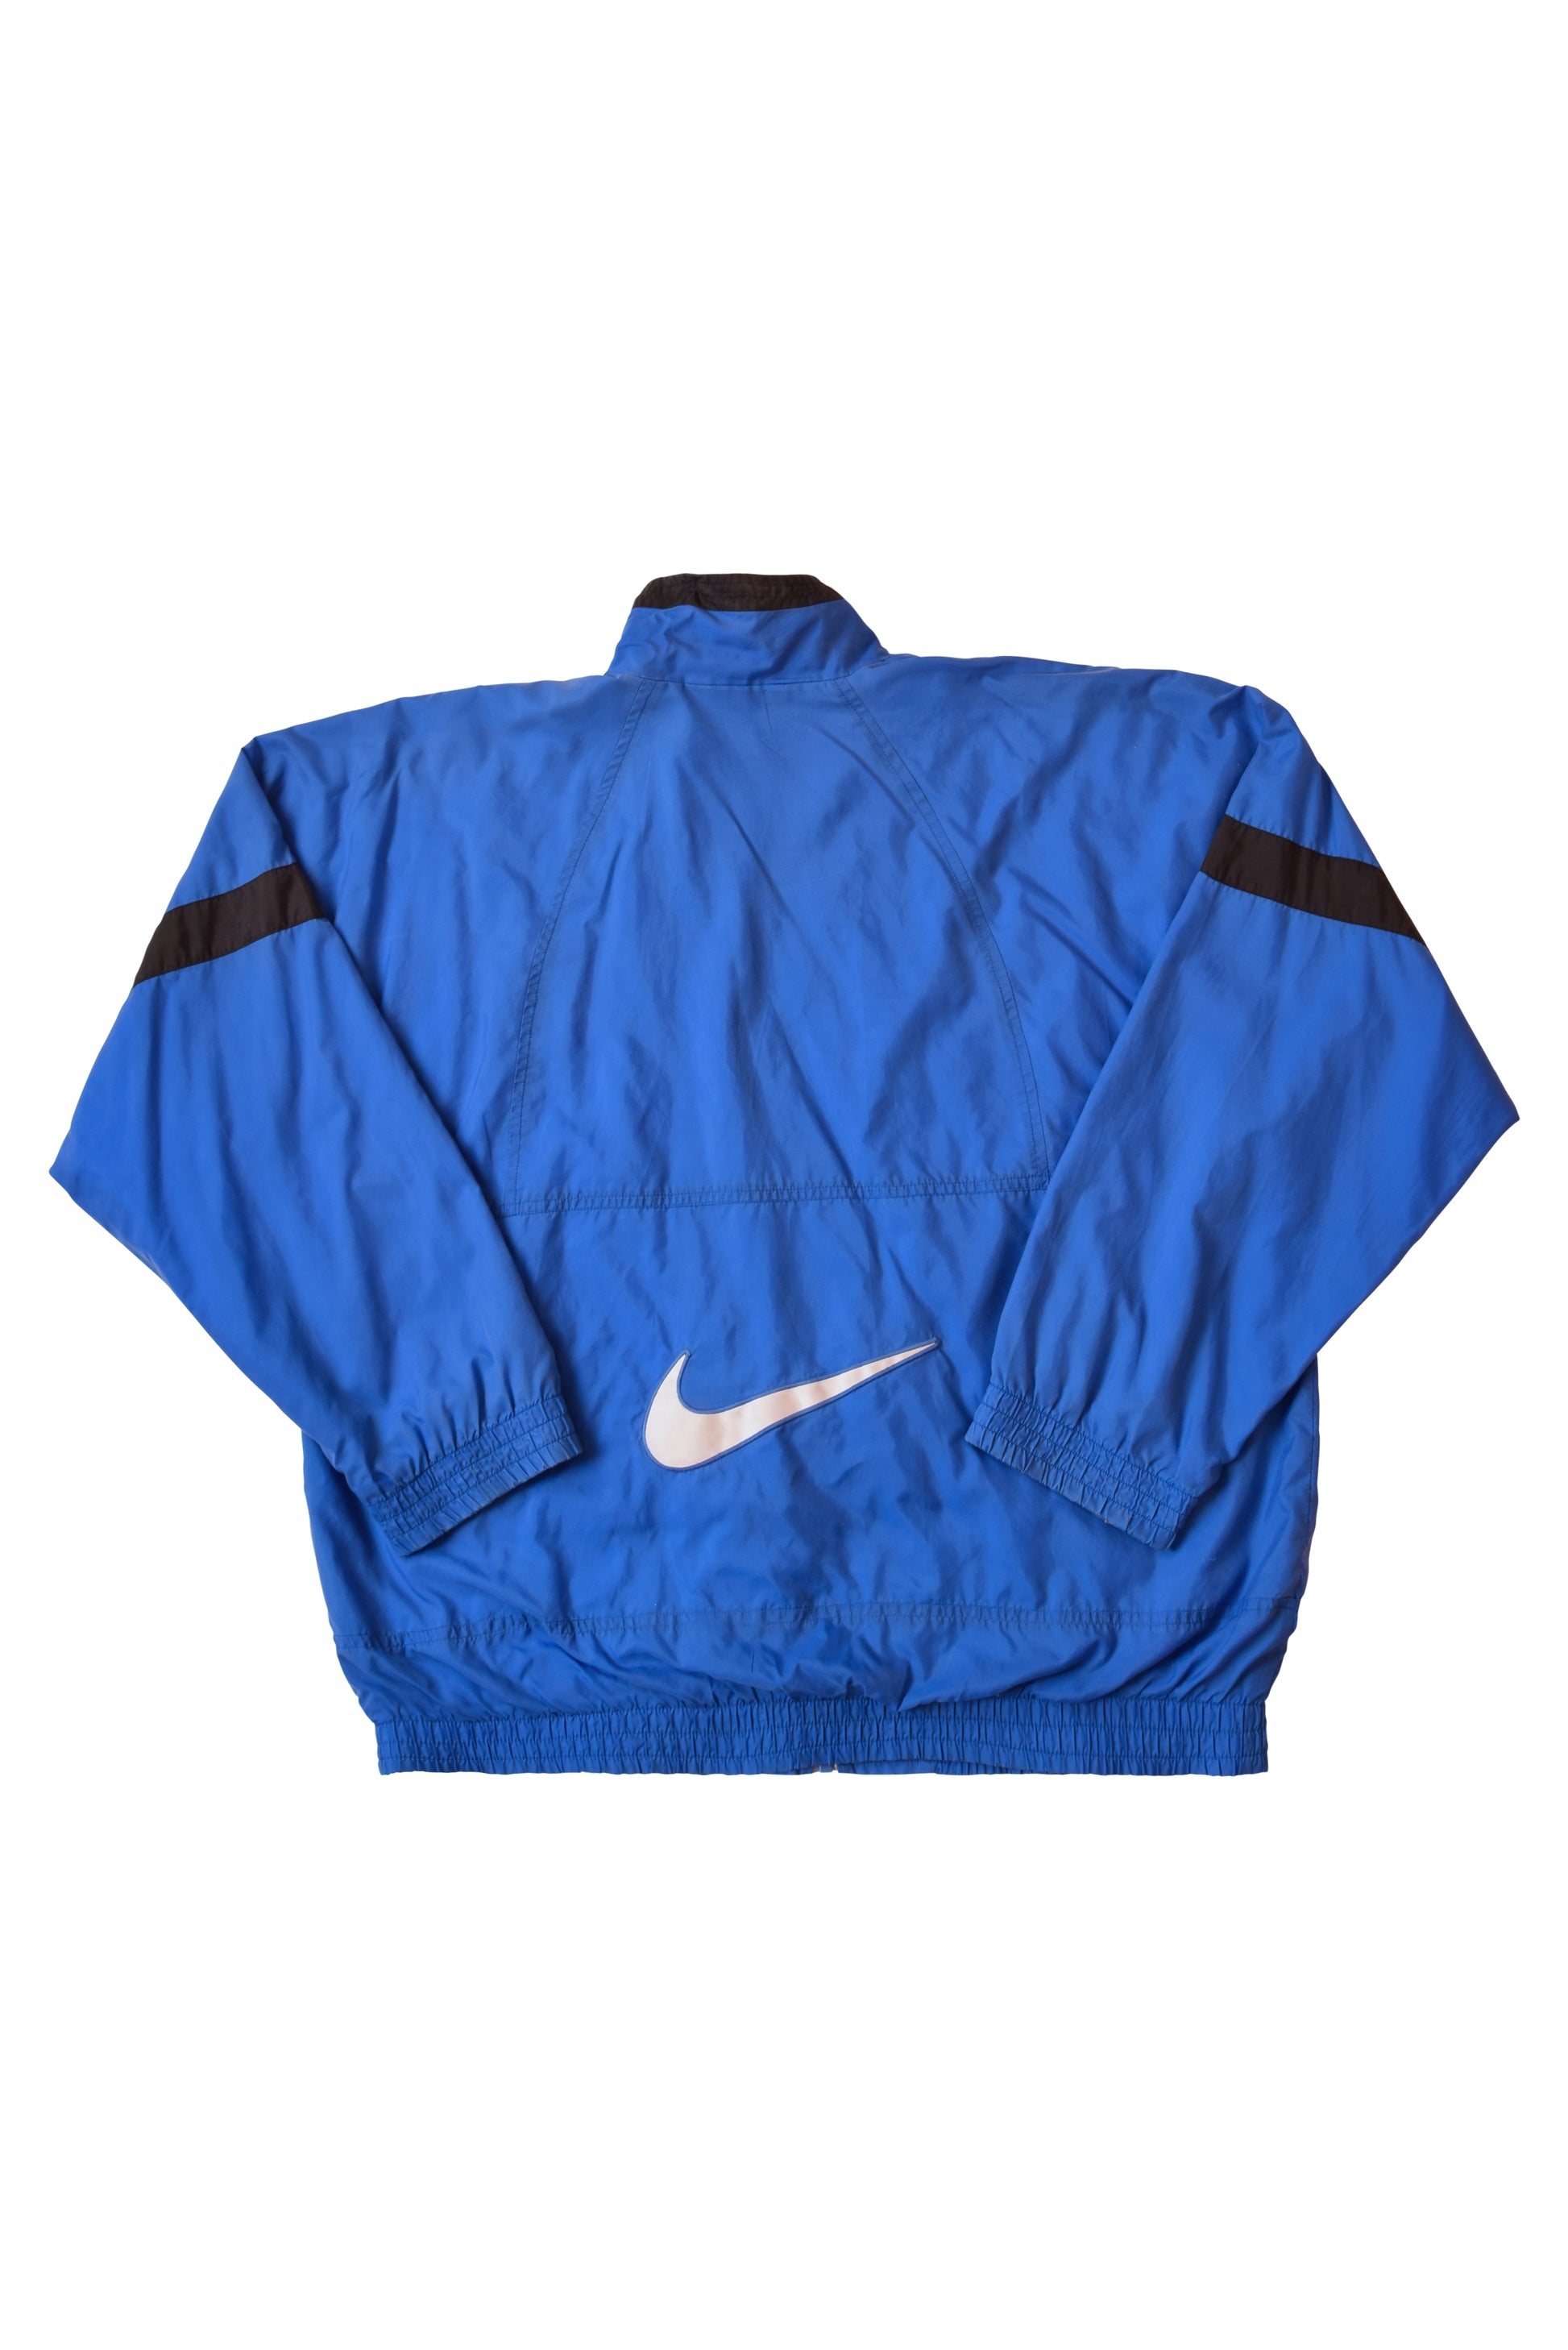 Vintage Nike 90's Jacket / Shell Size L-XL